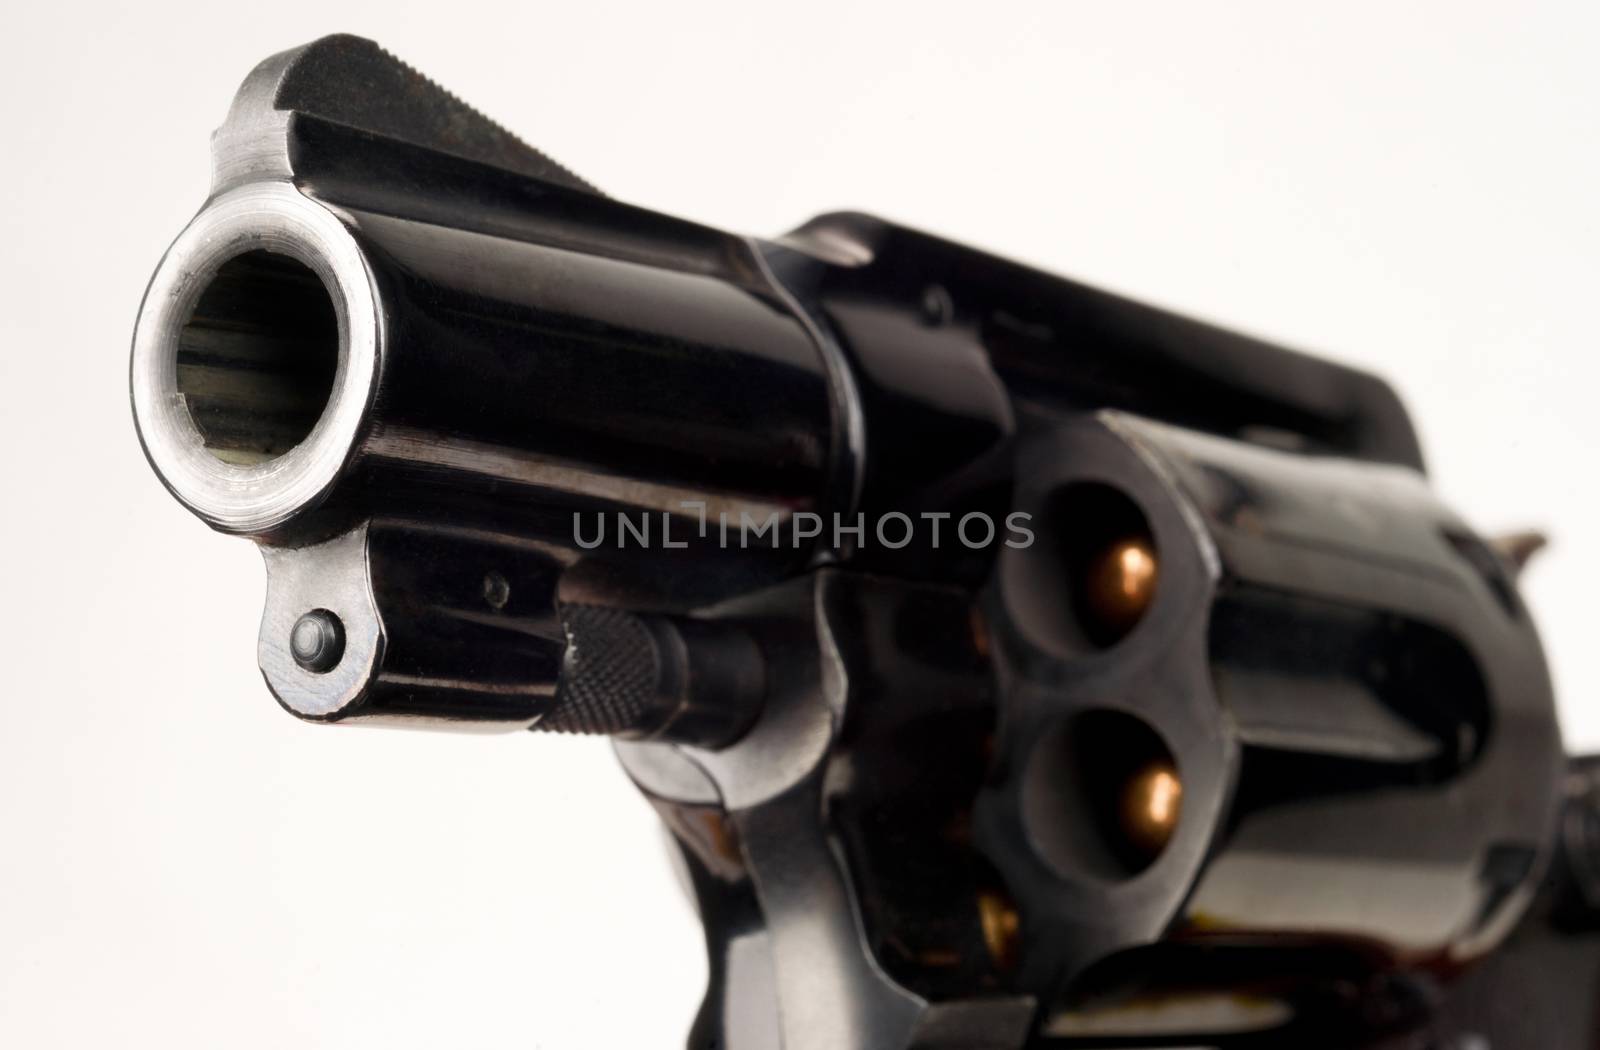 38 Caliber Revolver Pistol Loaded Cylinder Gun Barrel Close Up Pointed on White